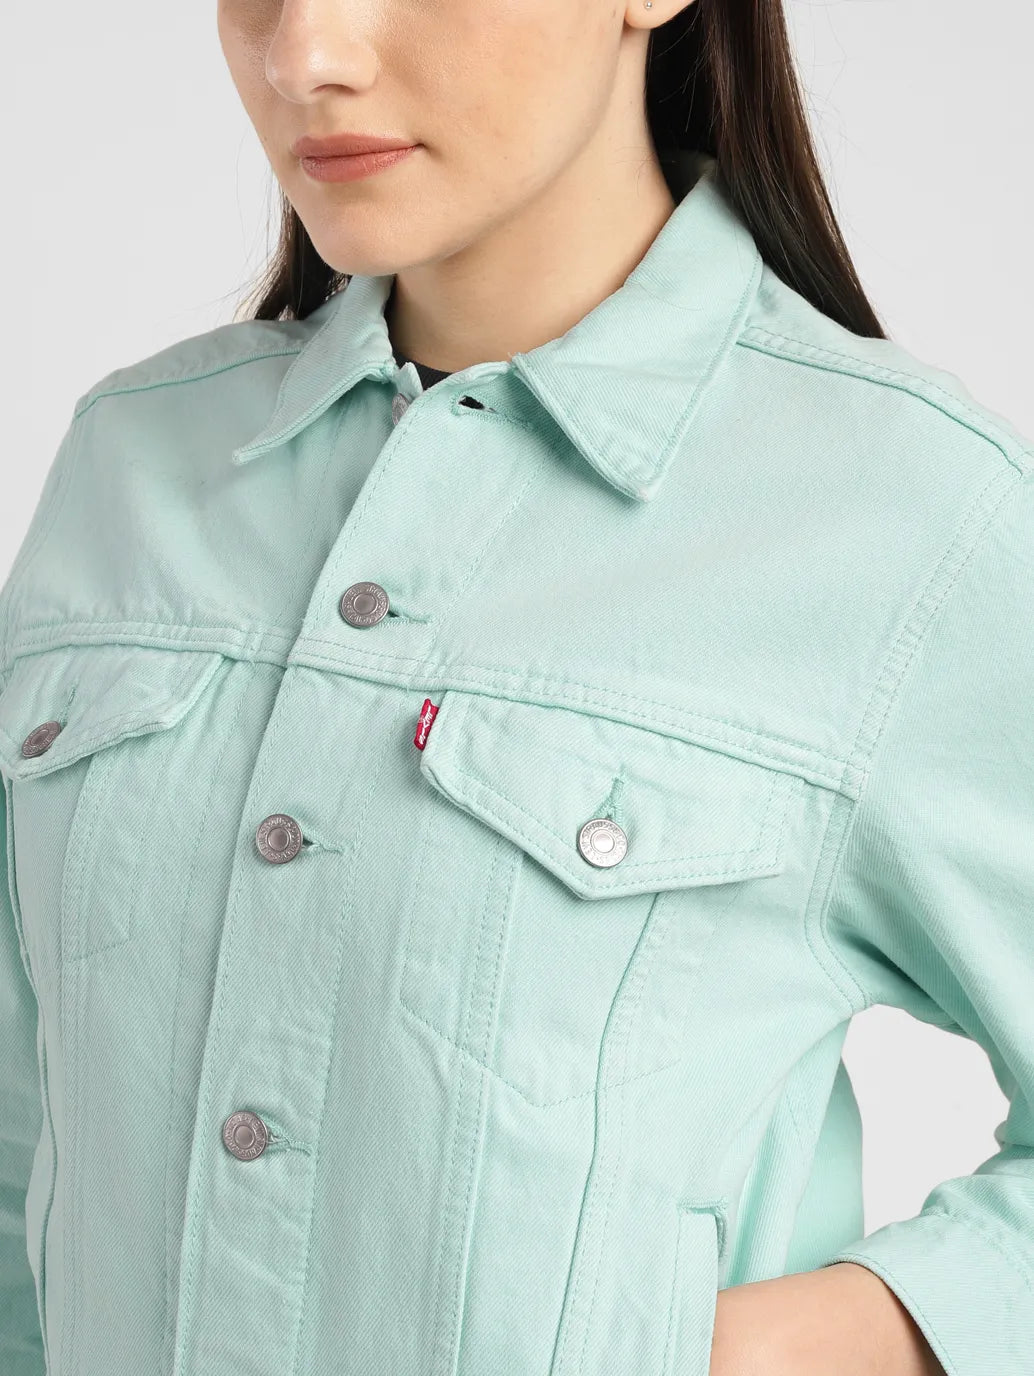 Women's Solid Green Spread Collar Jacket